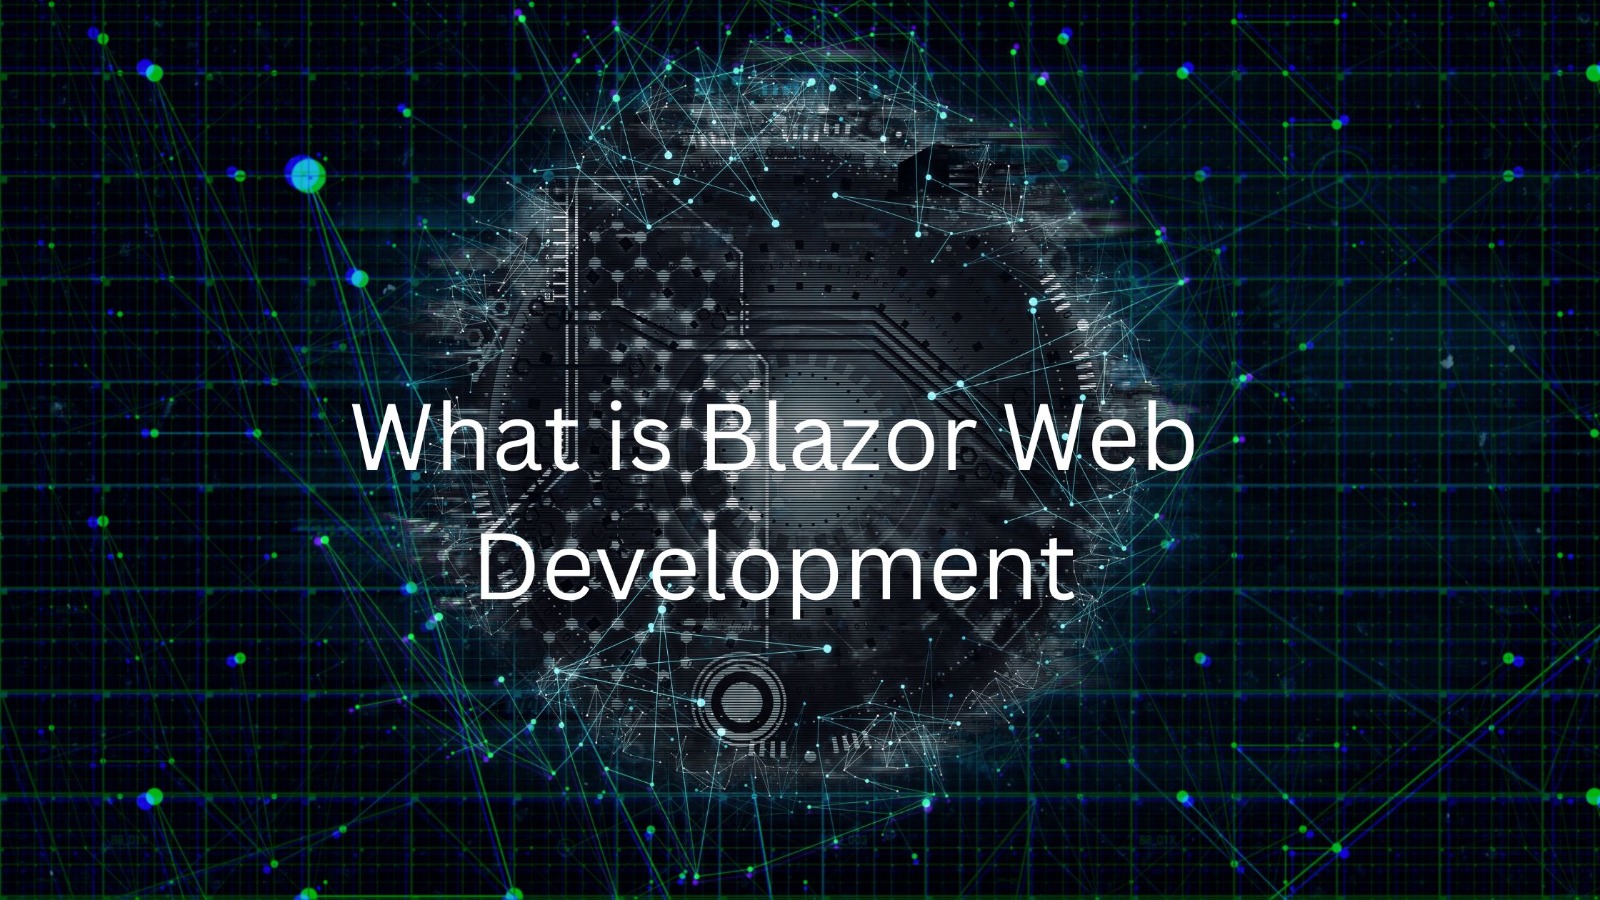 Blazor Web Development